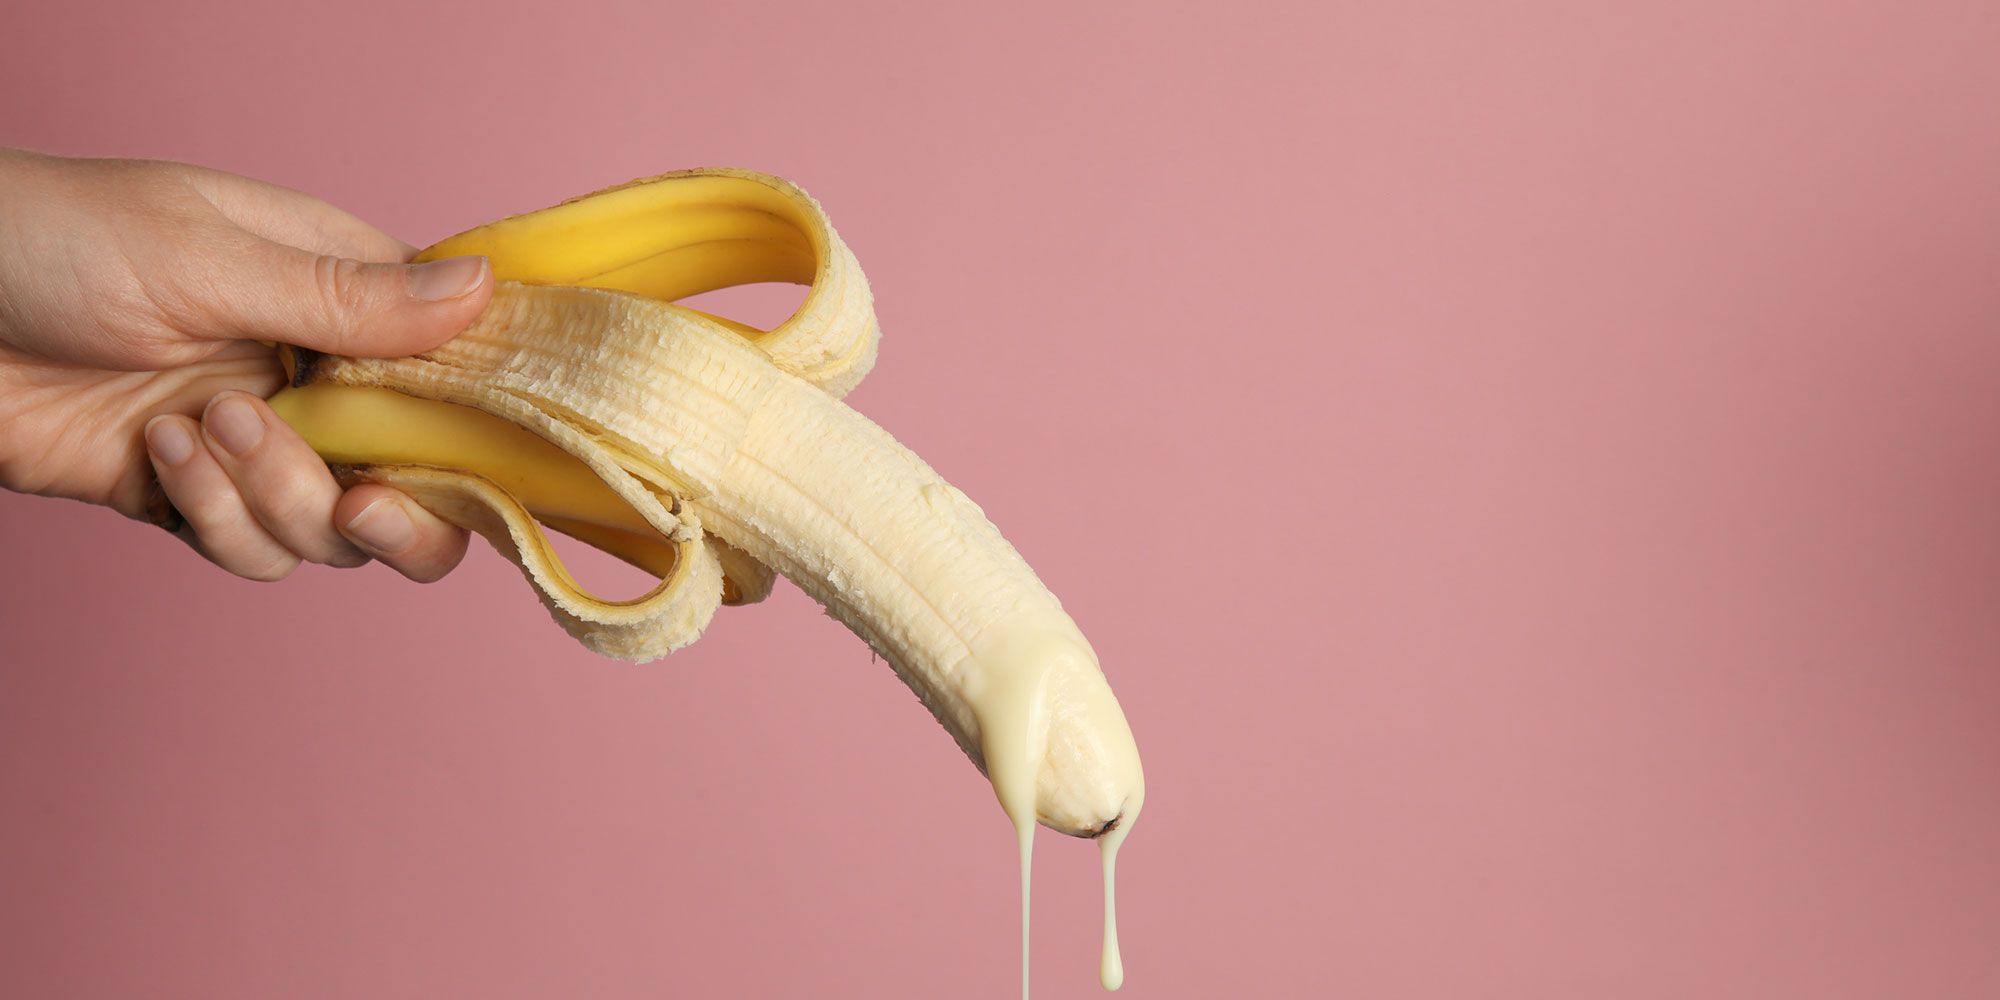 uk nude wifes fucking bananas